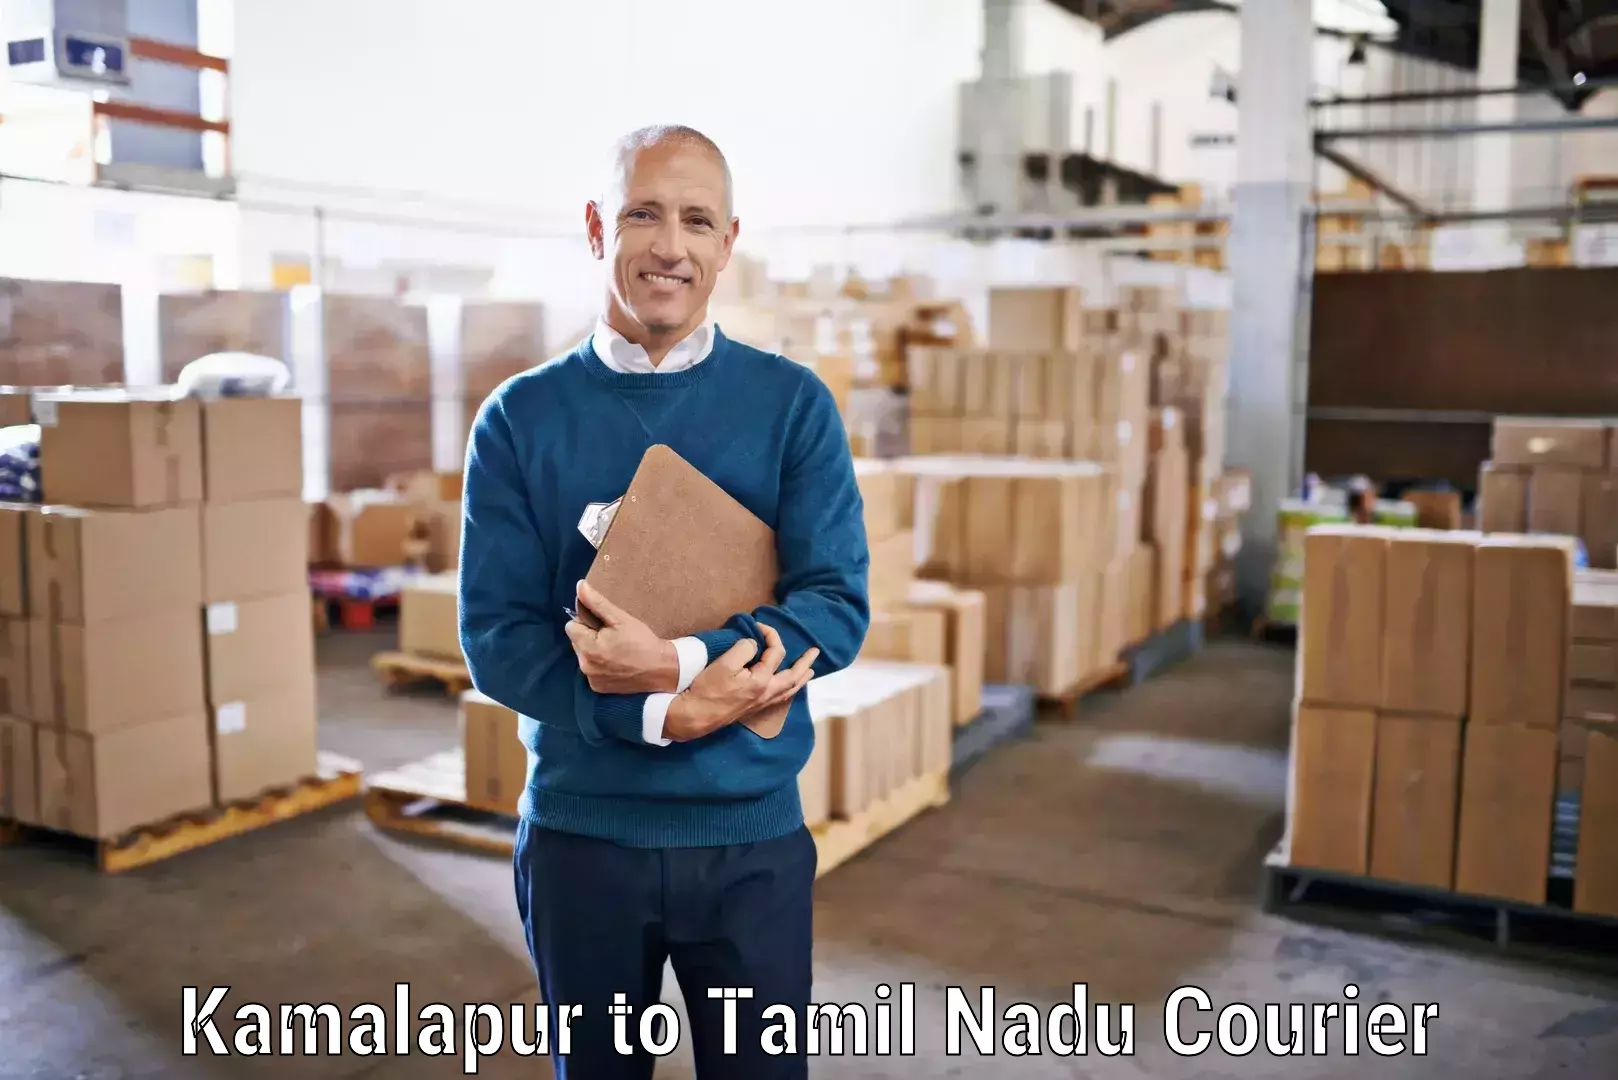 Courier service innovation Kamalapur to Nanguneri